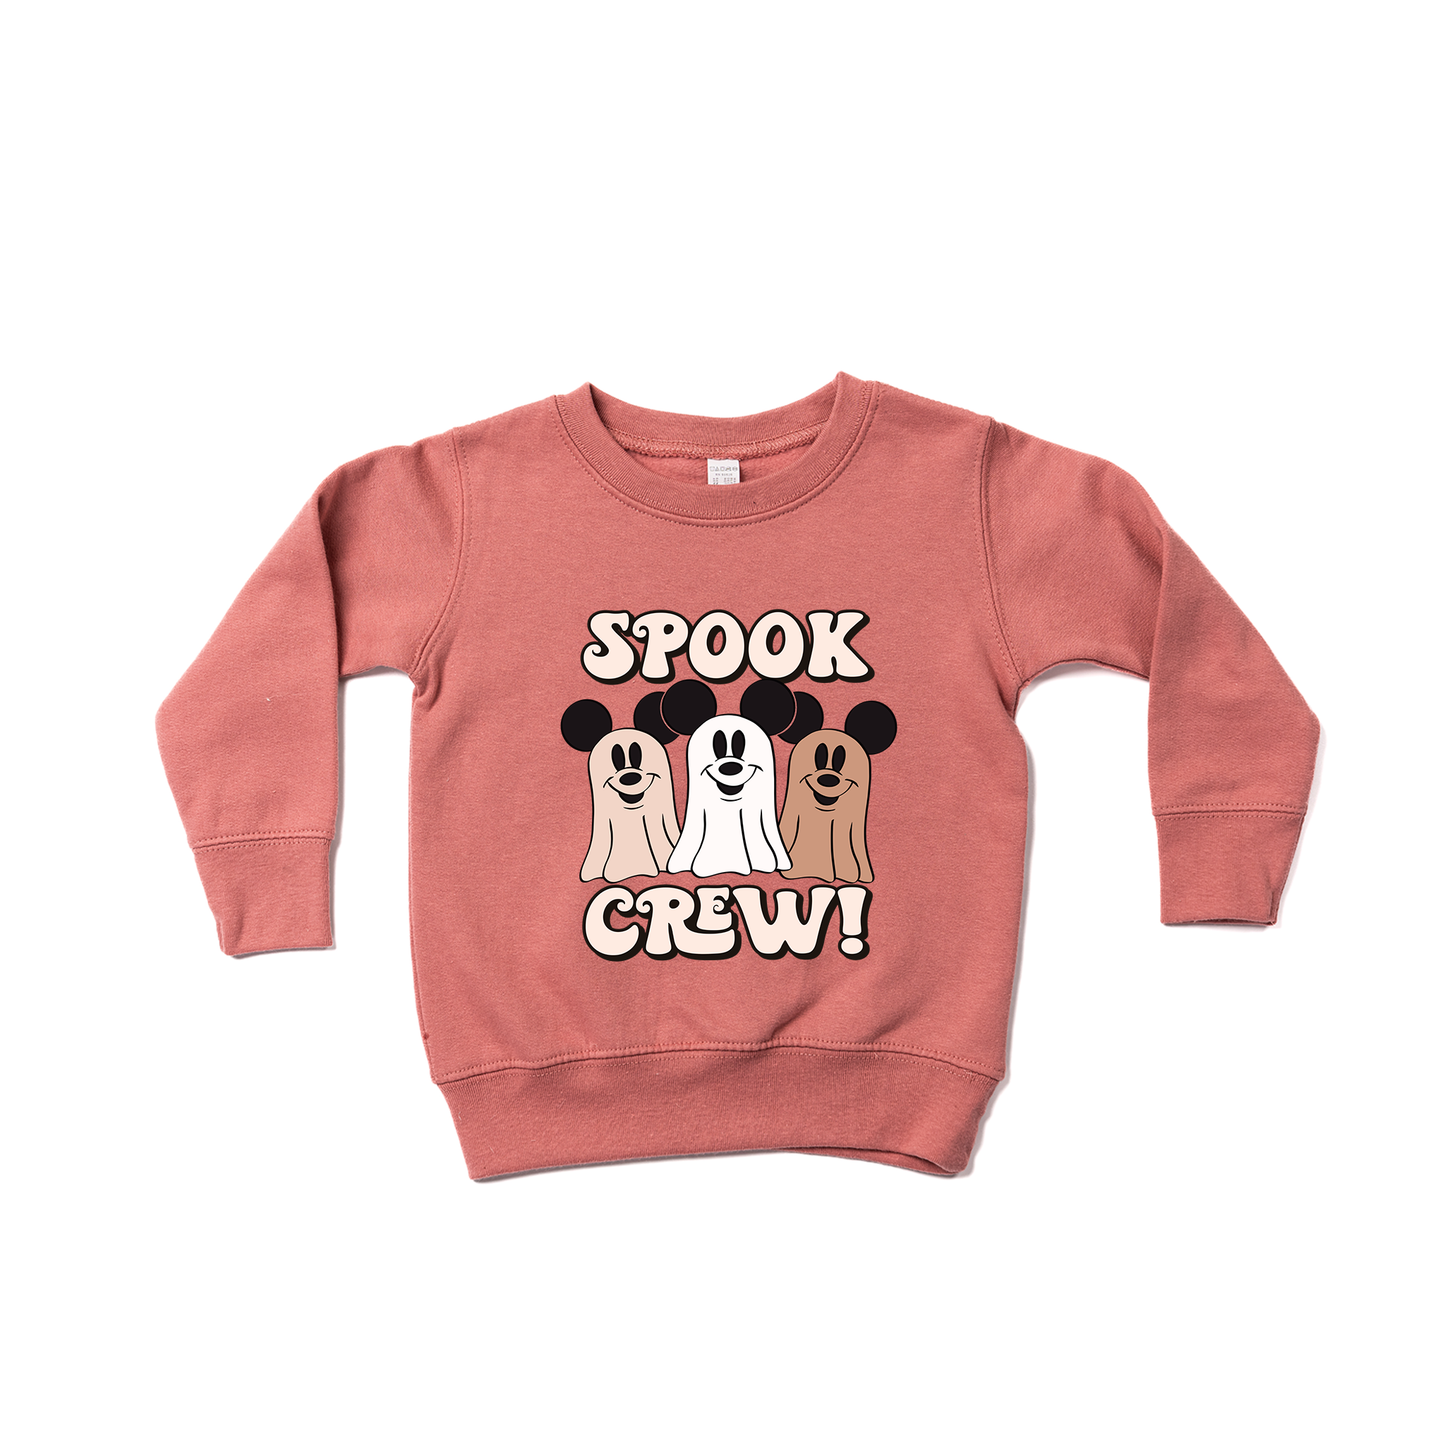 Spook Crew - Kids Sweatshirt (Mauve)